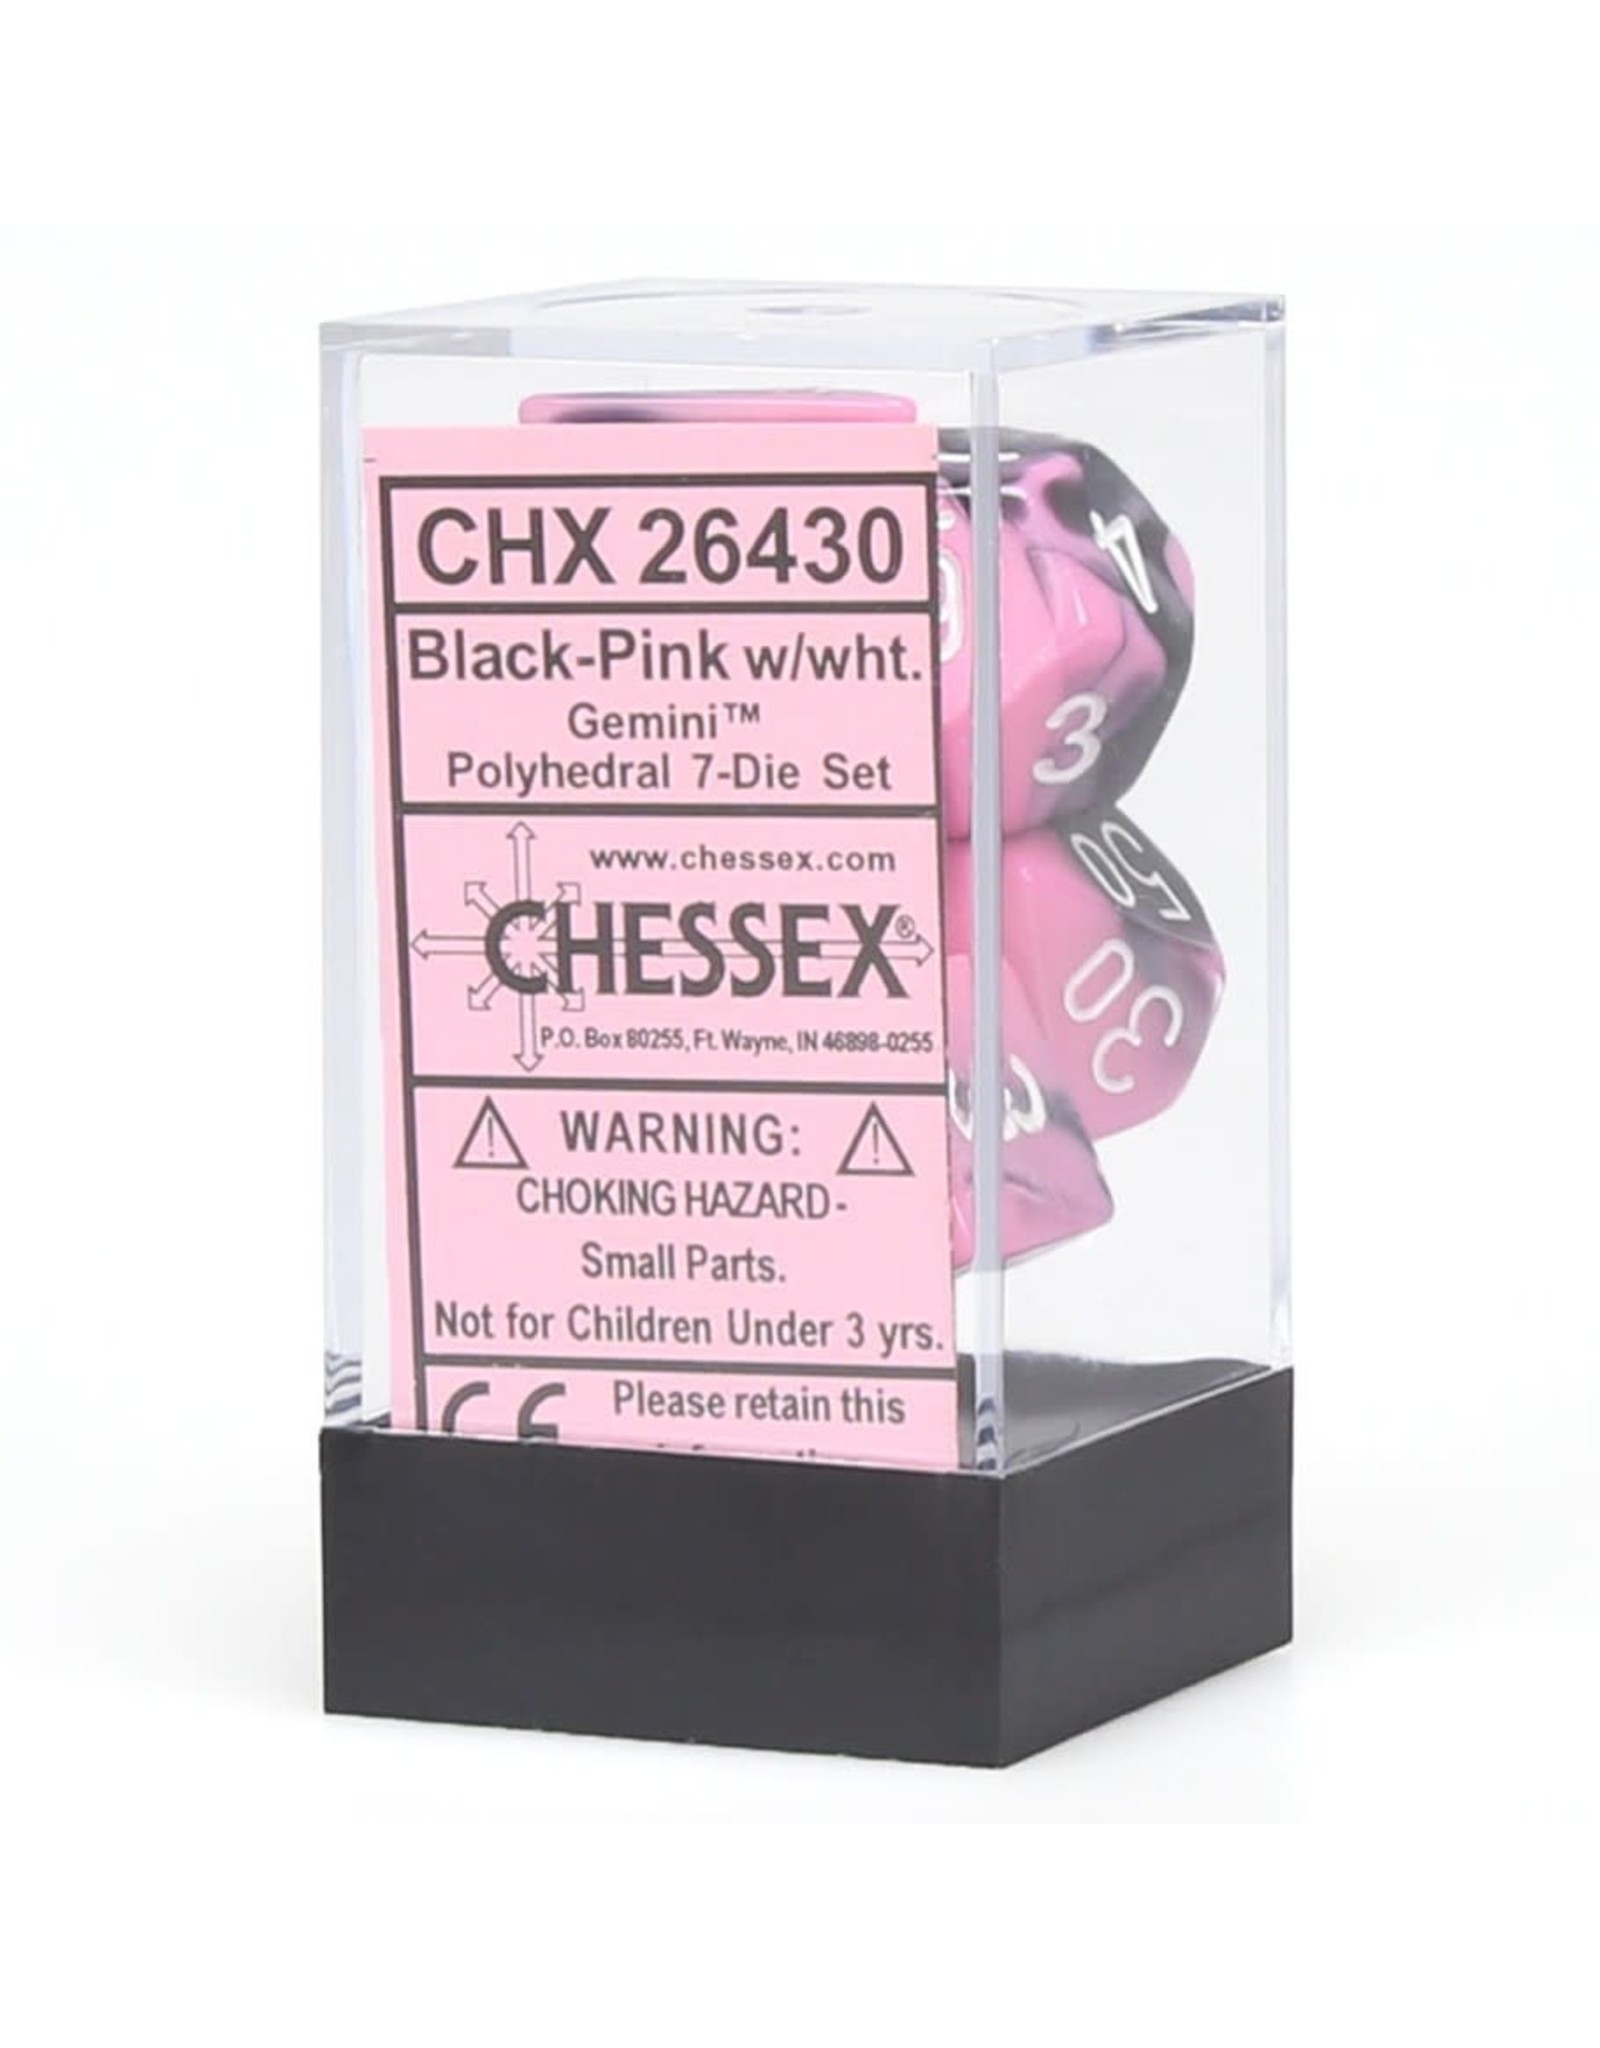 Chessex Polyhedral 7 Dice Set Gemini Black-Pink w/White CHX26430